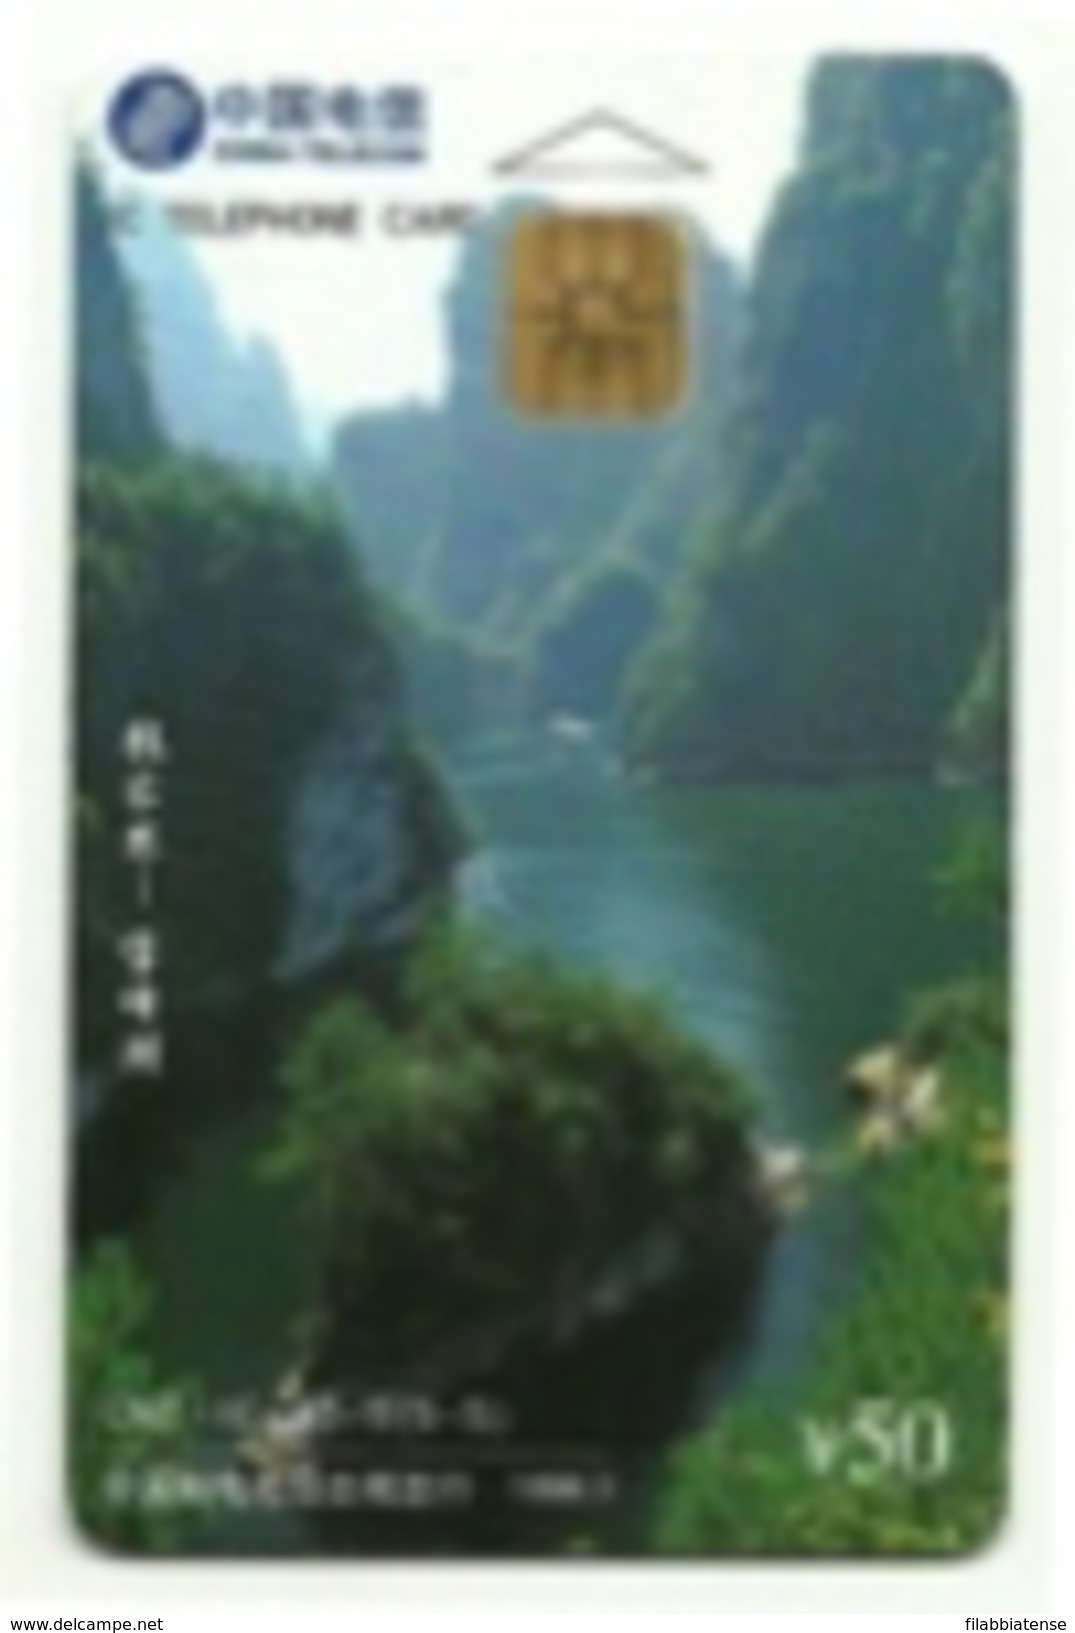 Cina - Tessera Telefonica Da 50 Yuan T155 - CHINA TELECOM - Paysages